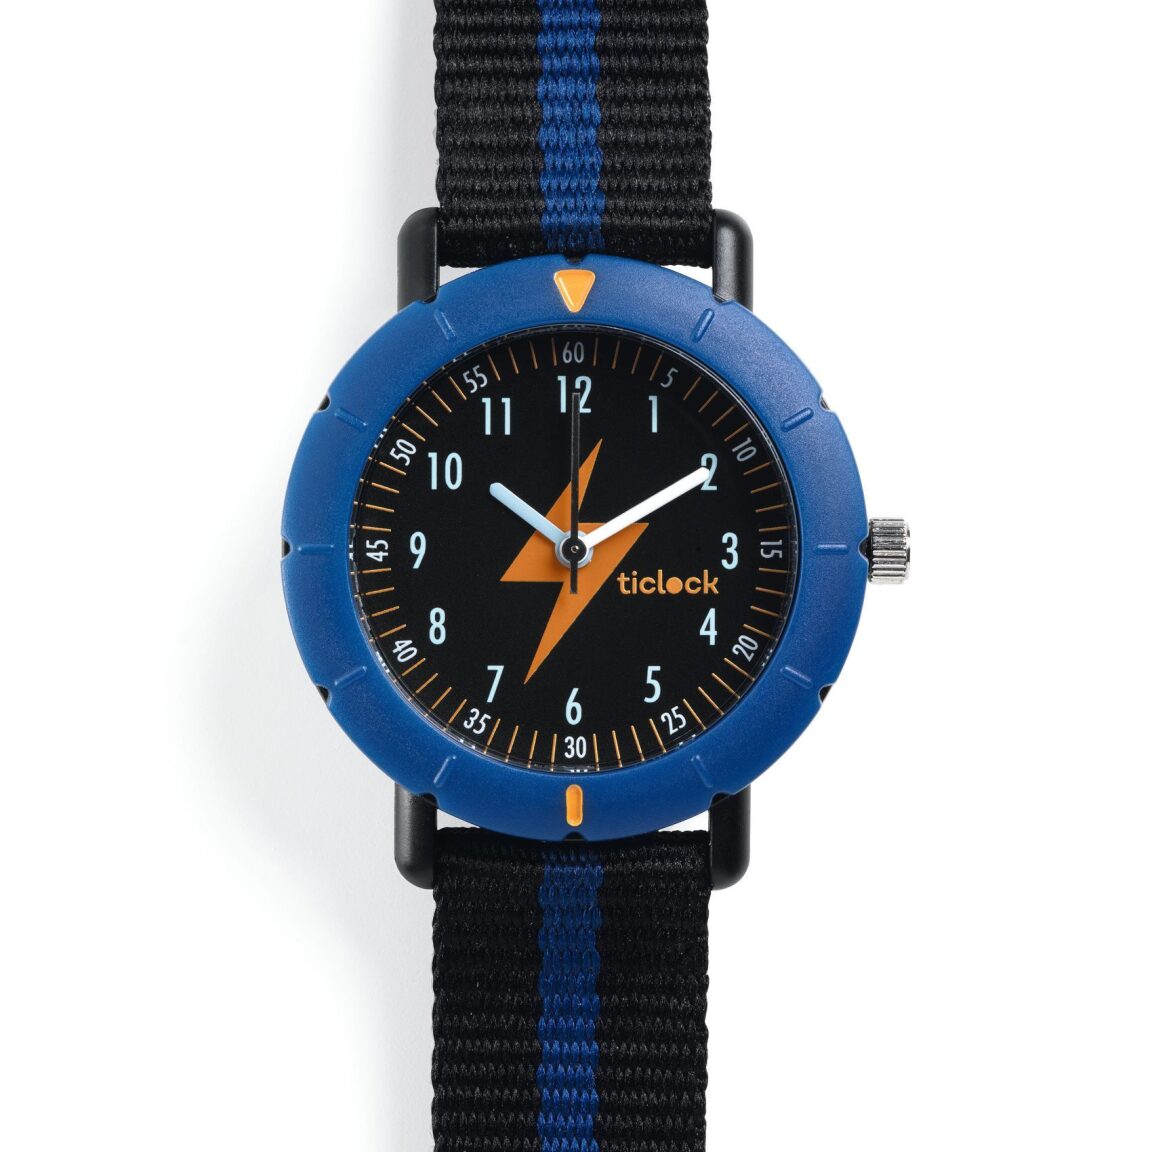 Ticlock Blue Flash Sport Watch